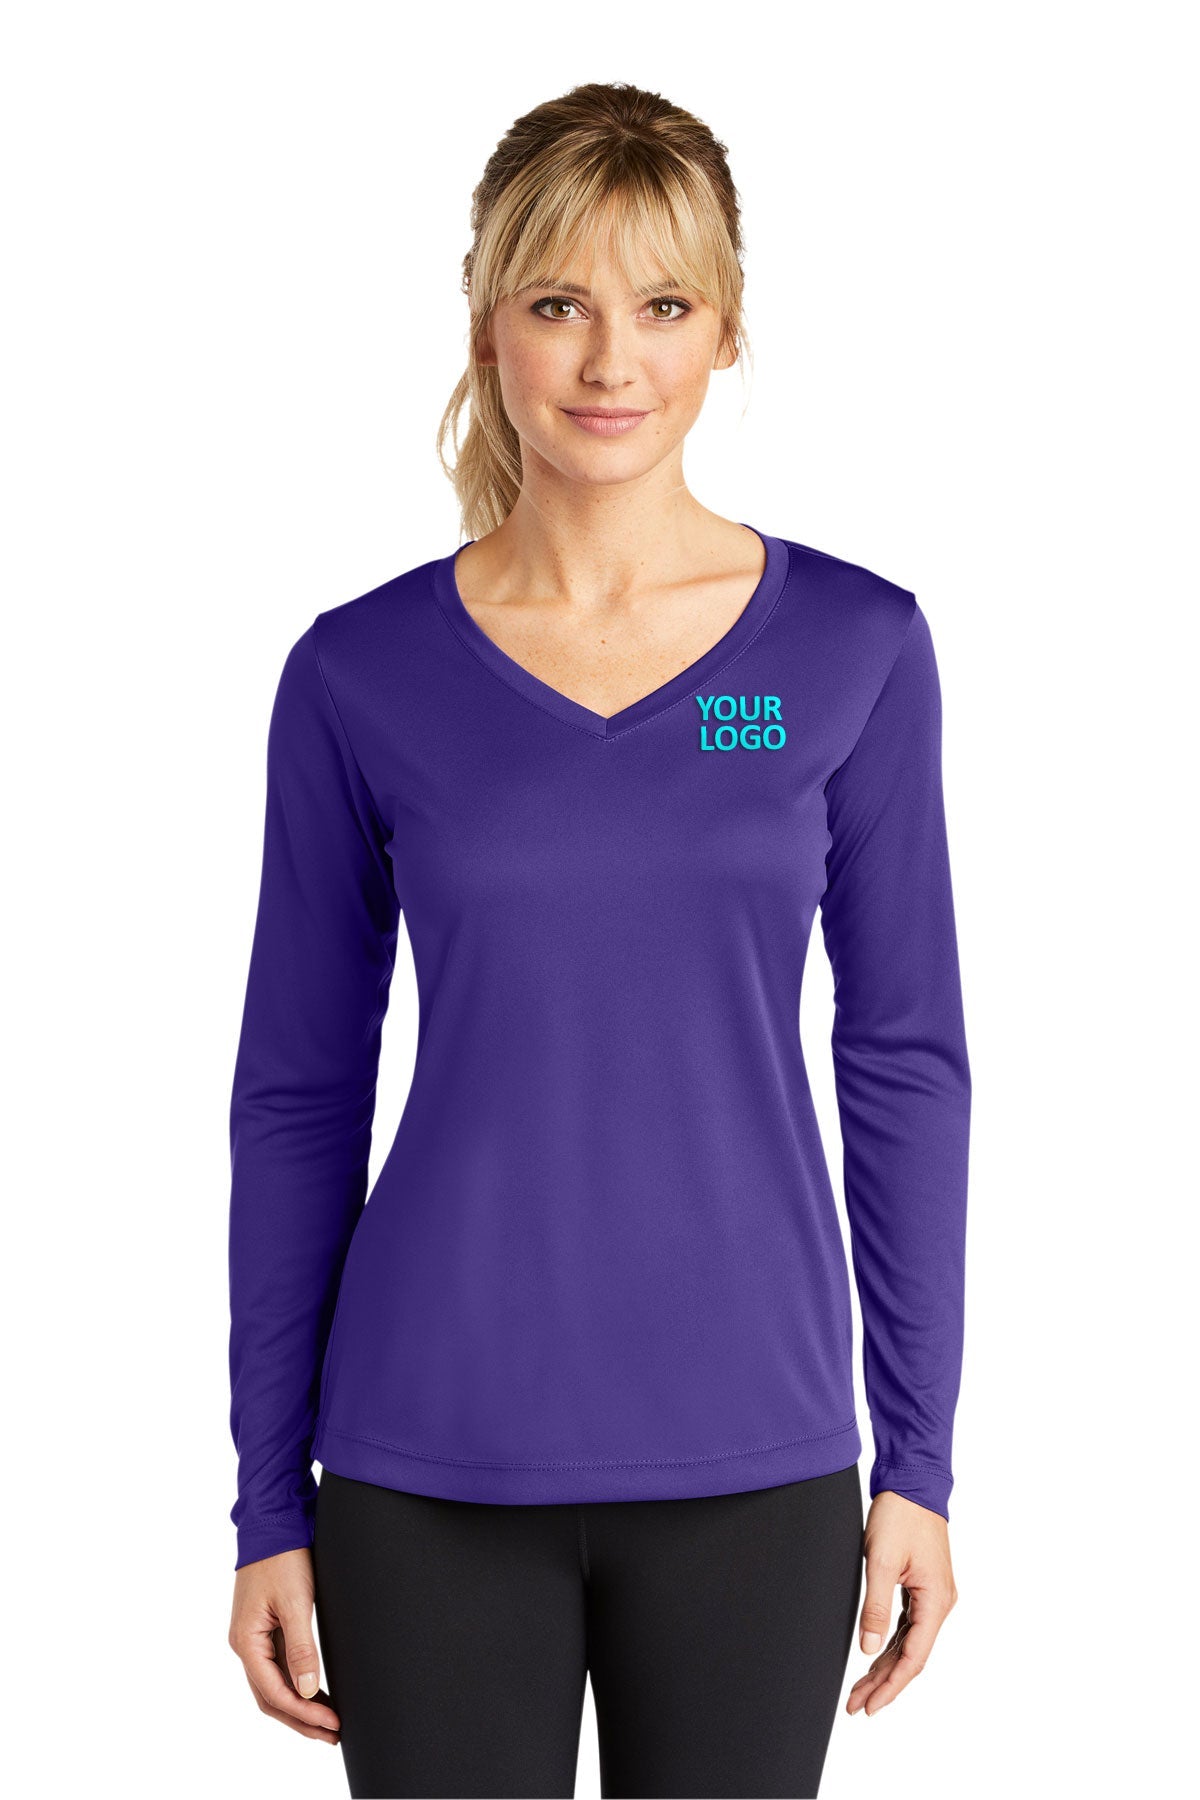 Sport-Tek Ladies Long Sleeve PosiCharge Competitor Customized V-Neck Tee's, Purple